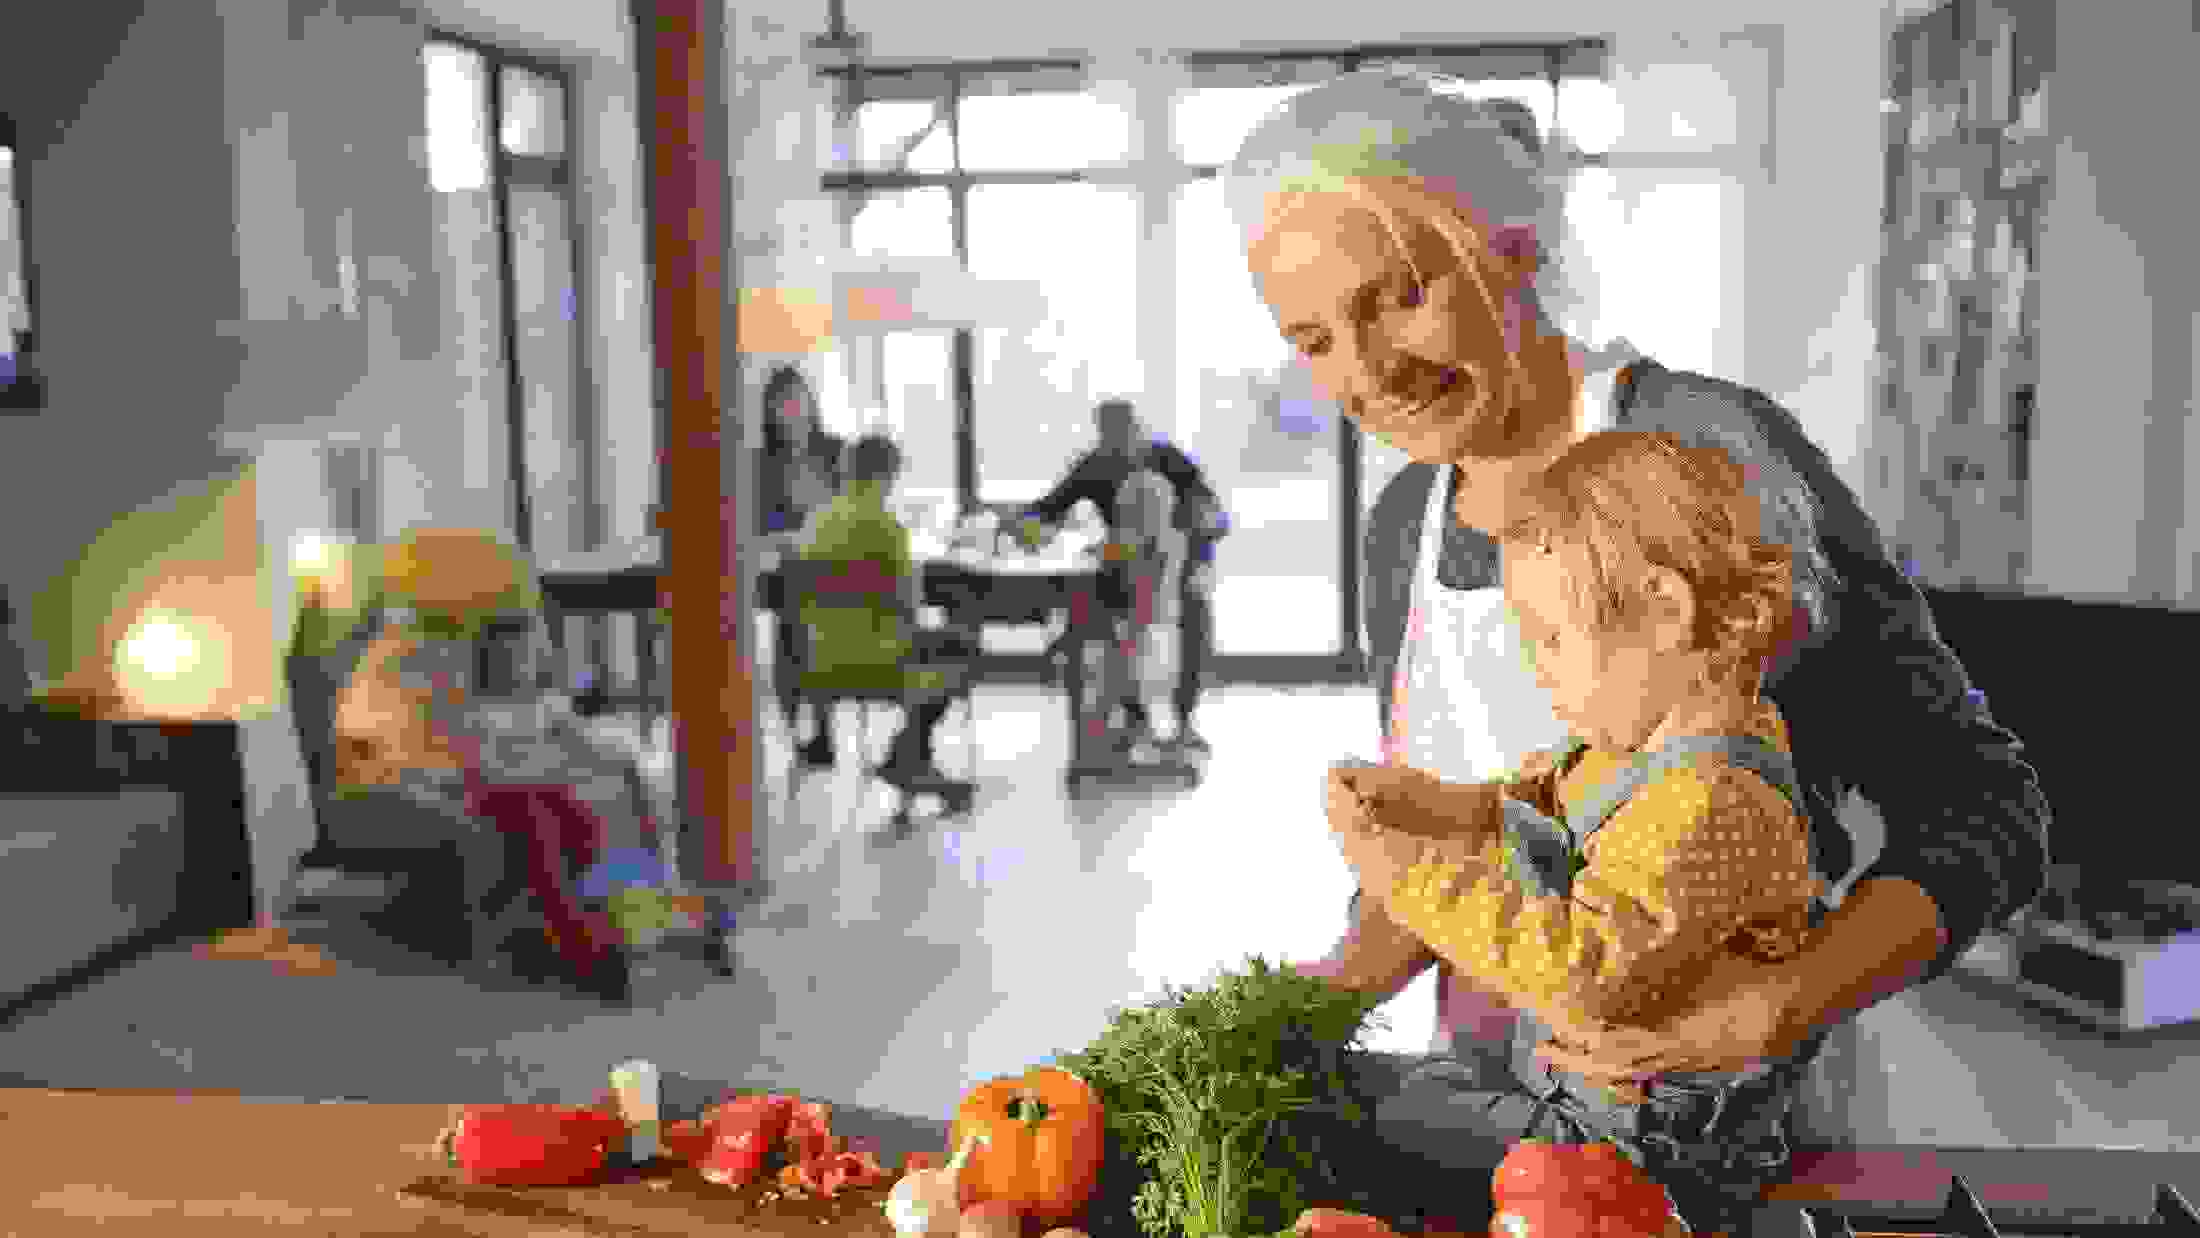 Grandmother with her grandchild preparing vegetables